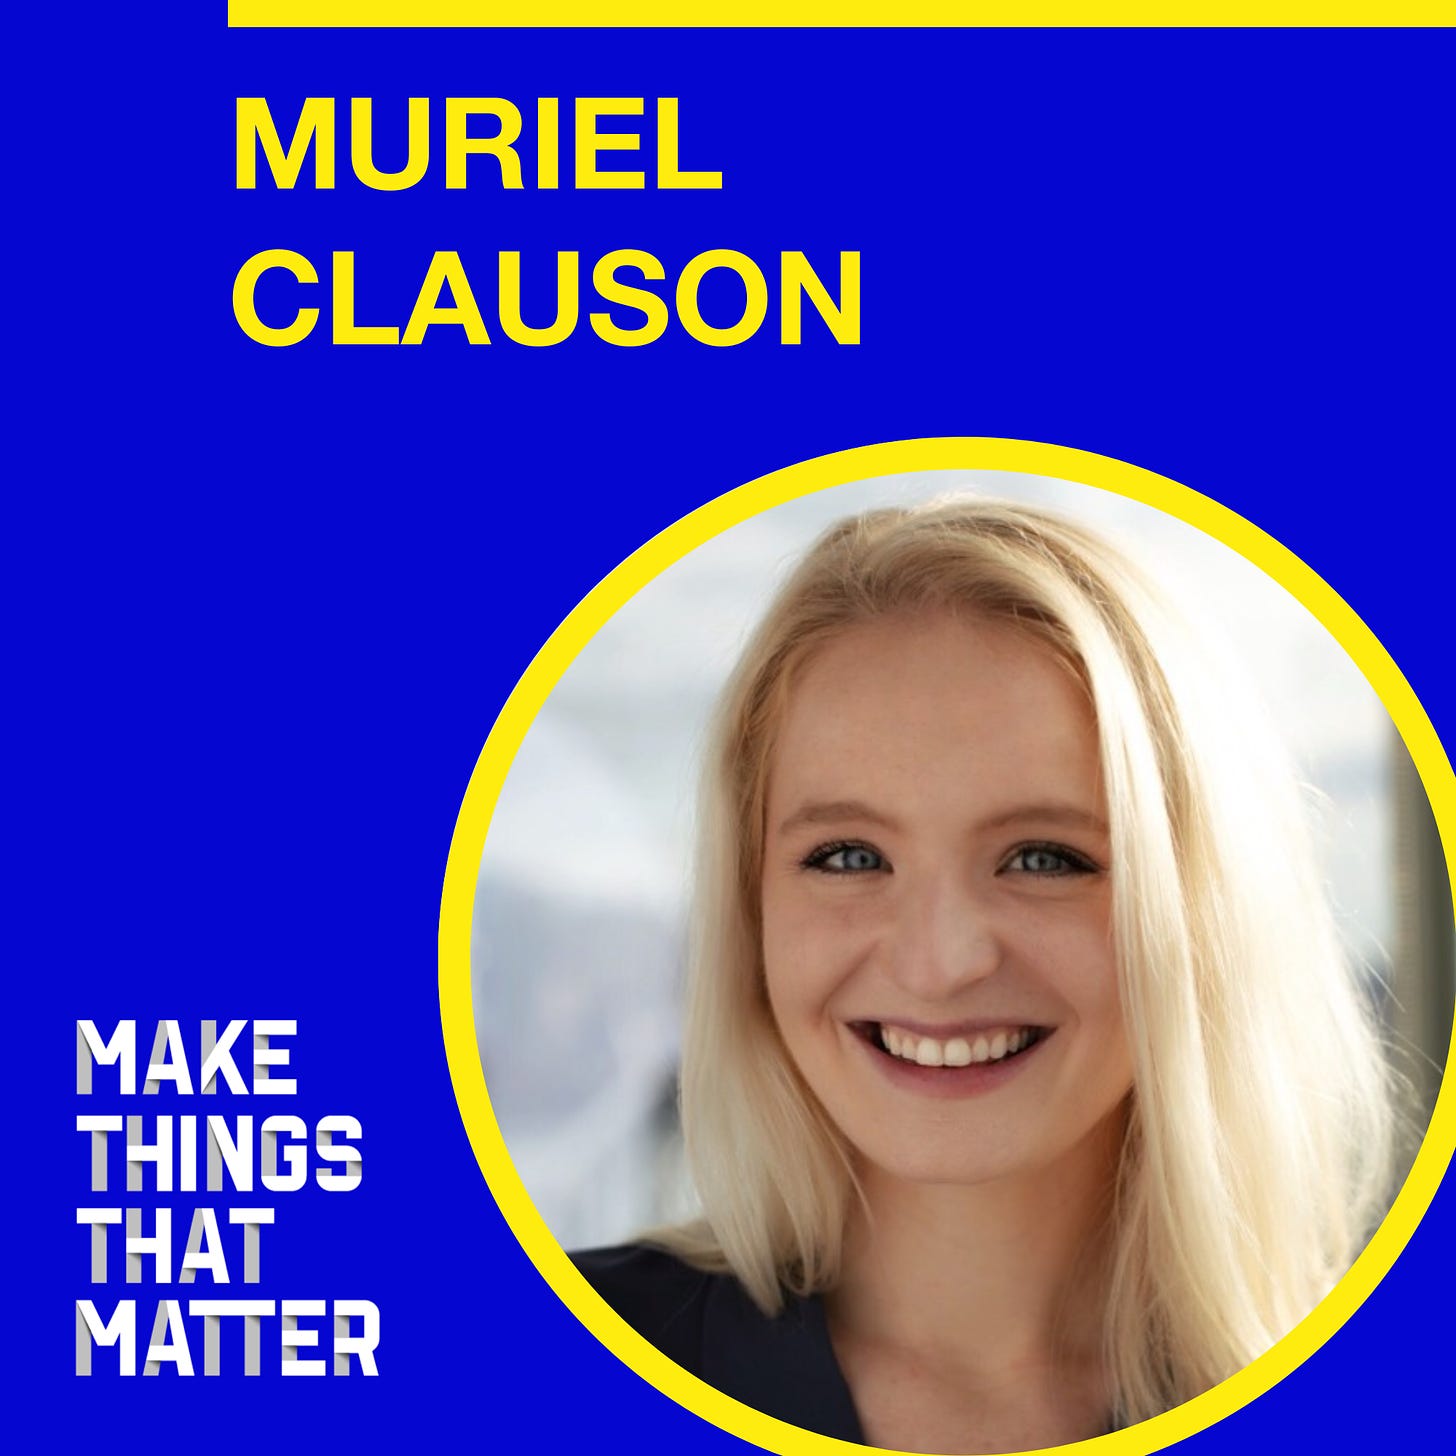 Muriel Clauson